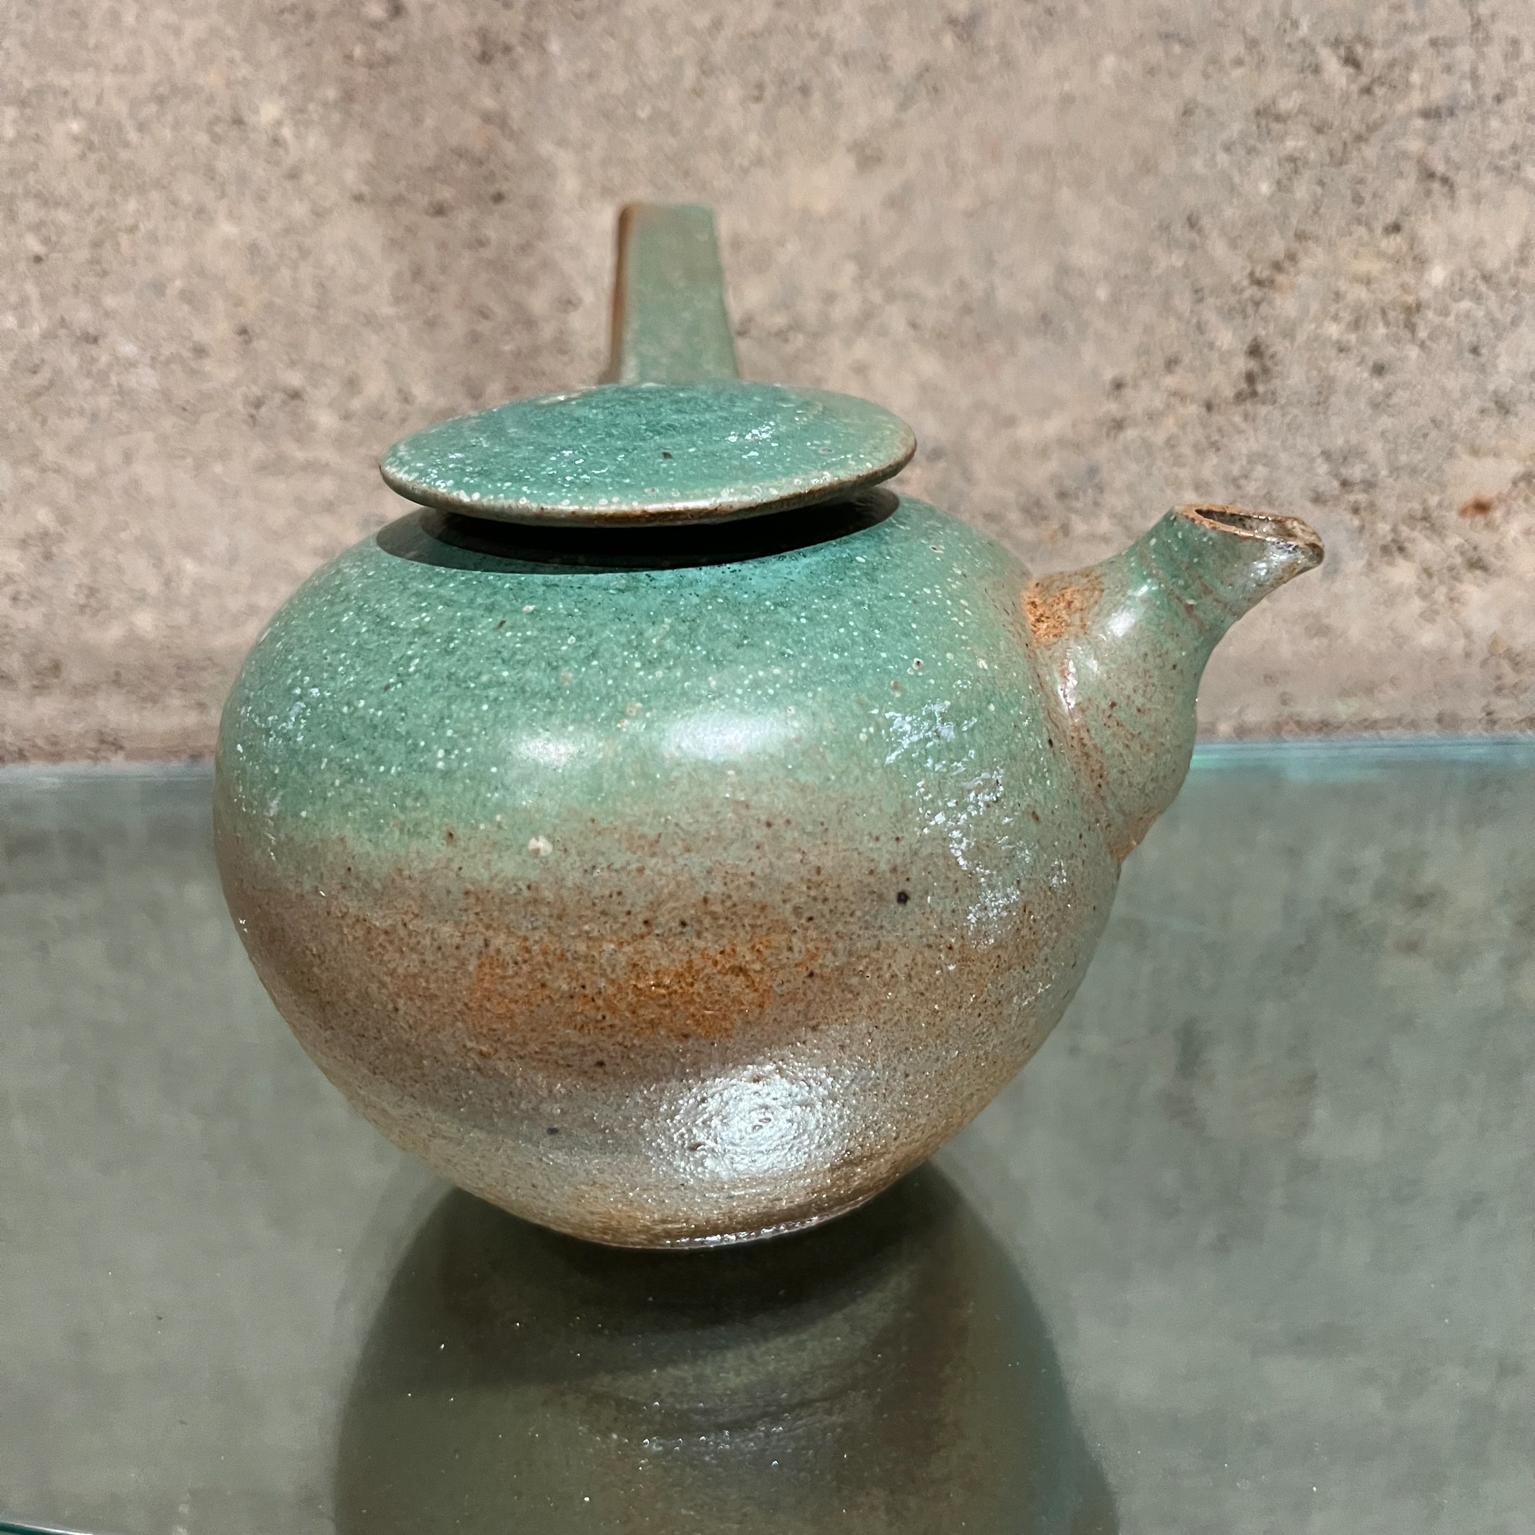  1960s Japanese Art Pottery Vintage Modern Green Tea Pot 1